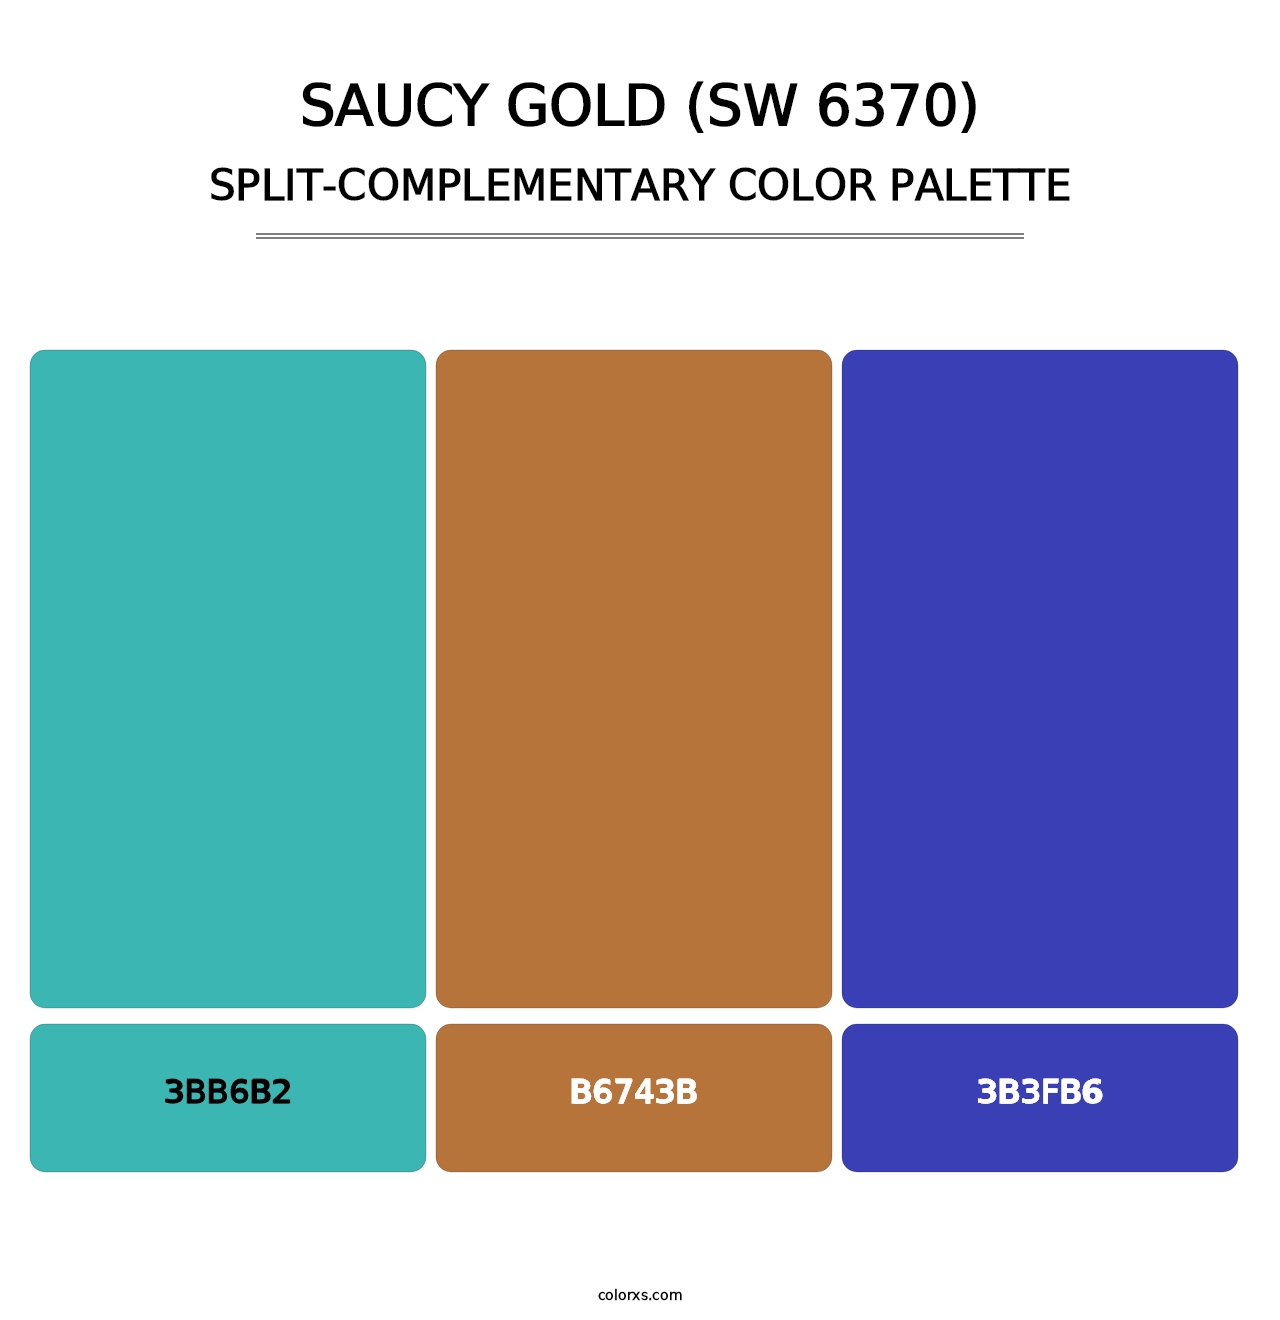 Saucy Gold (SW 6370) - Split-Complementary Color Palette